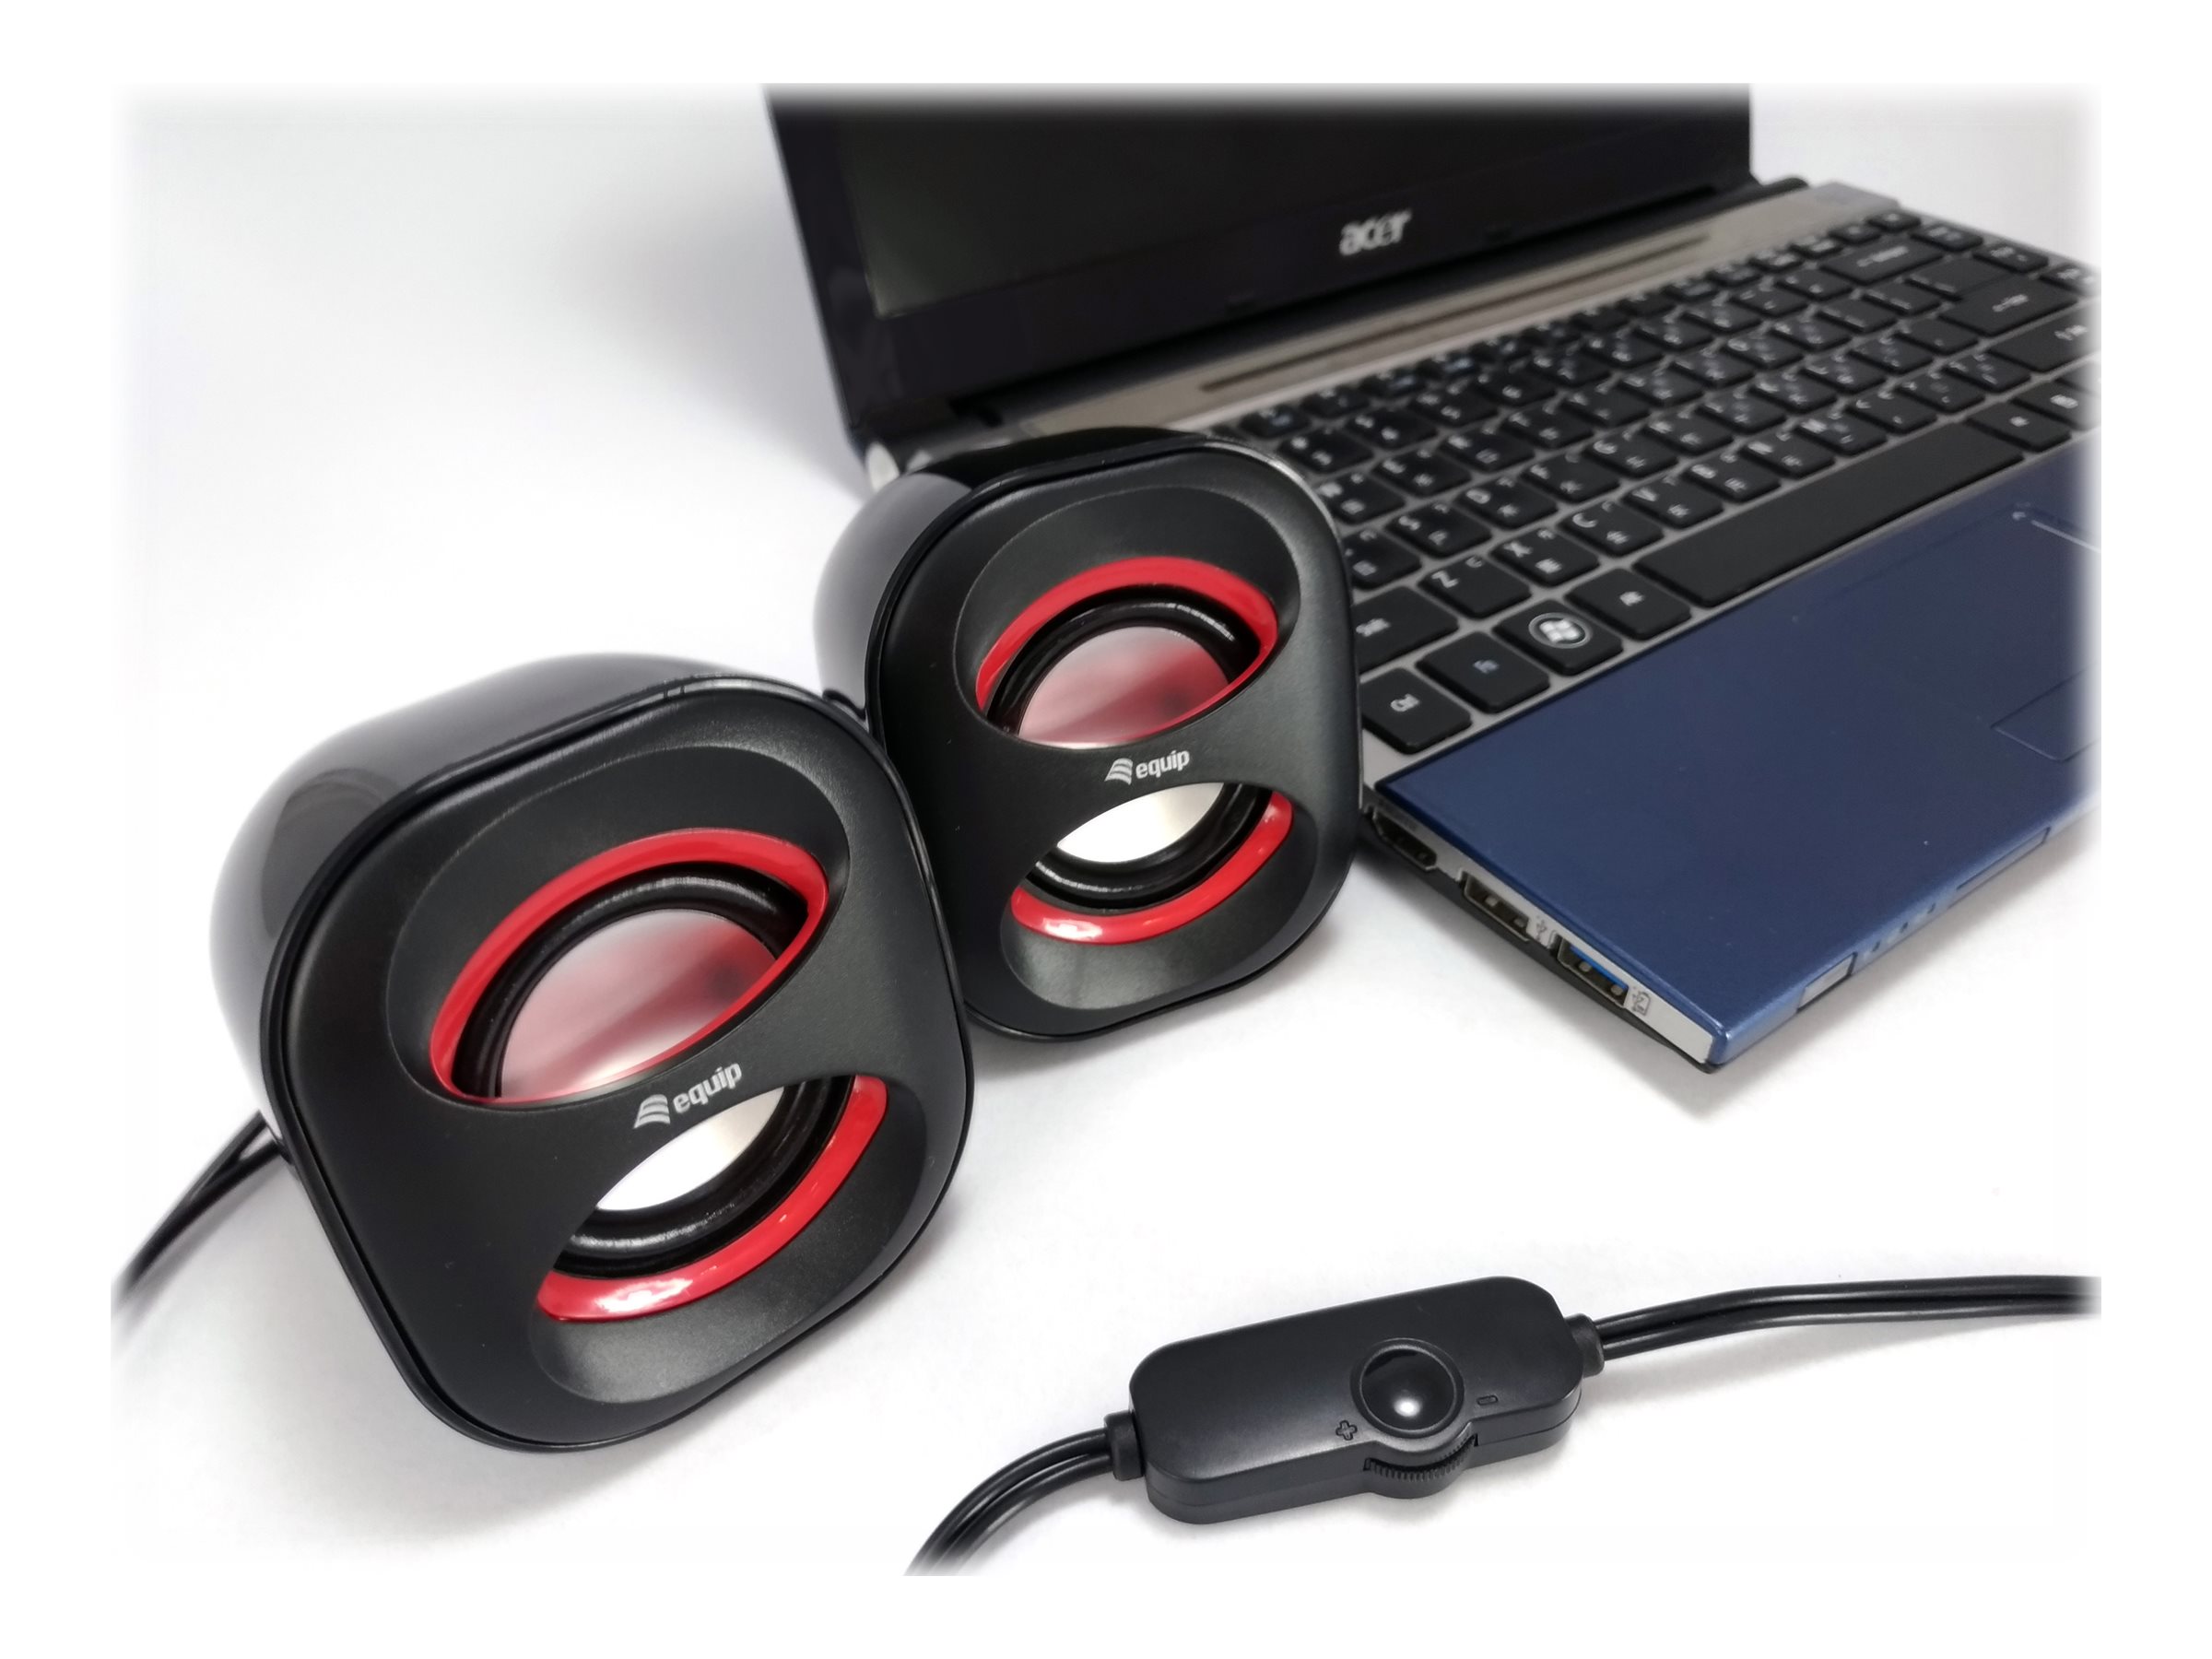 Equip Mini USB - Lautsprecher - für PC - 3 Watt